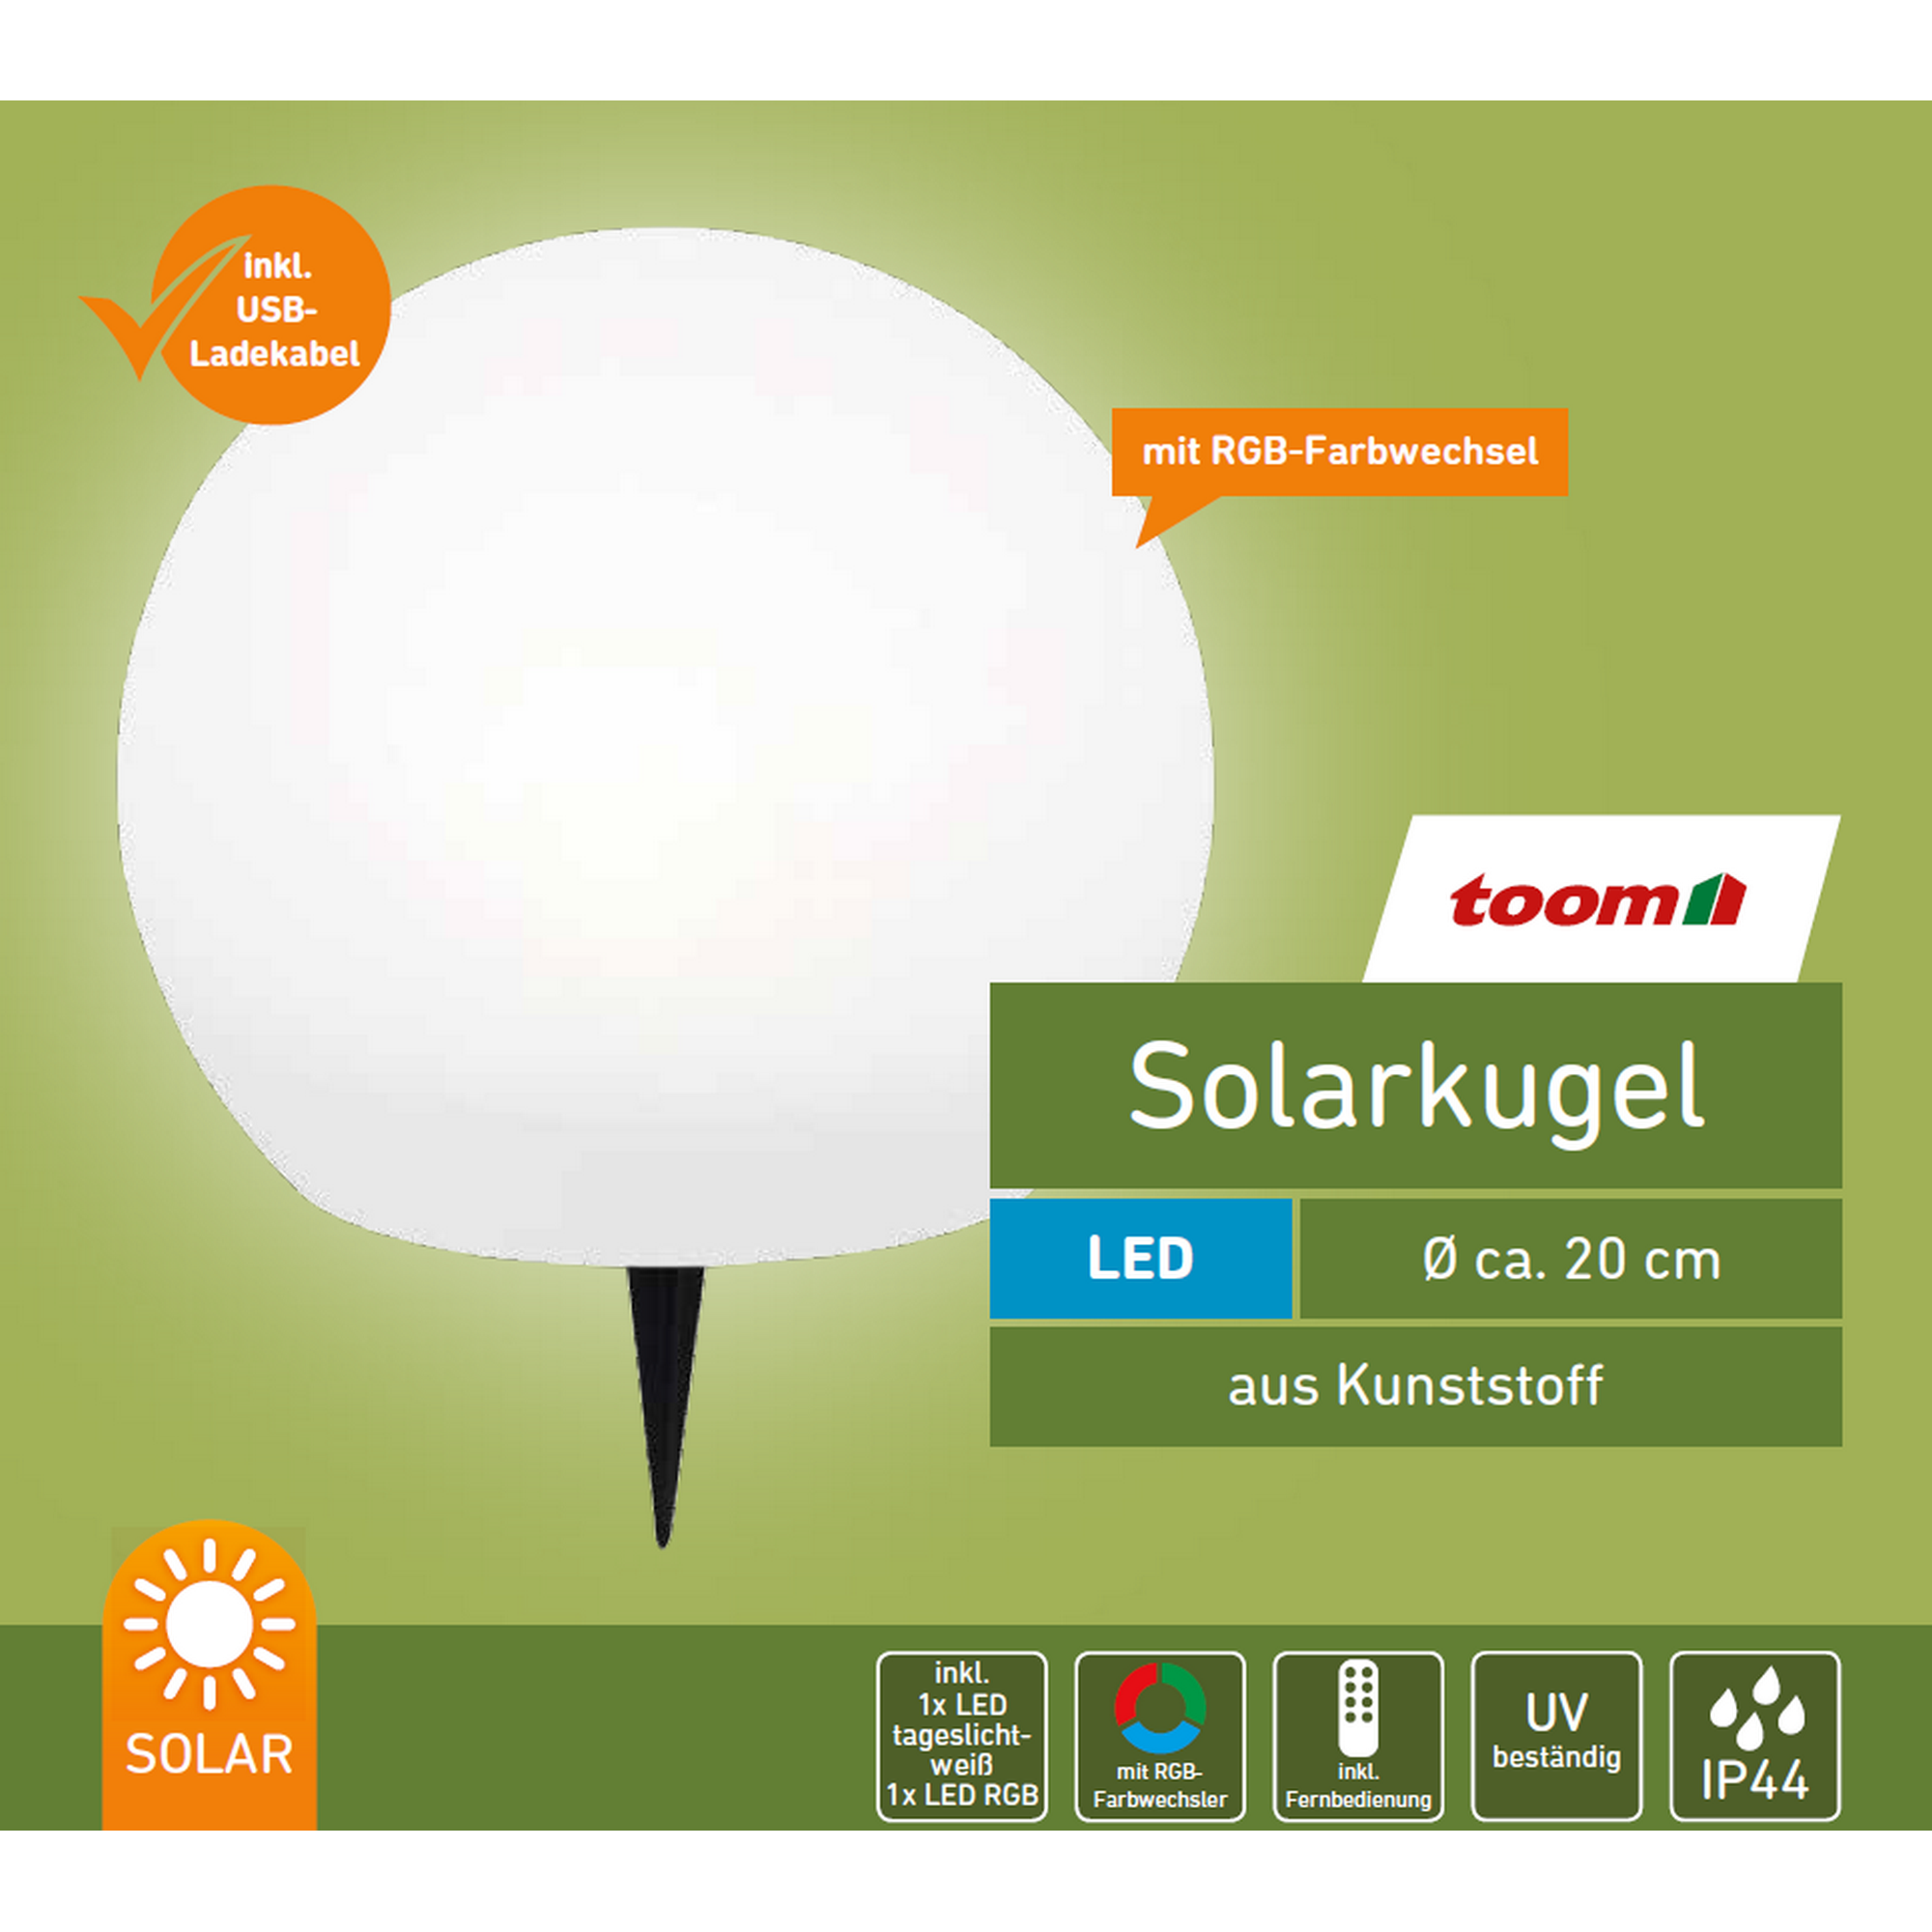 LED-Solarkugel mit Farbwechsler Ø 20 cm + product picture